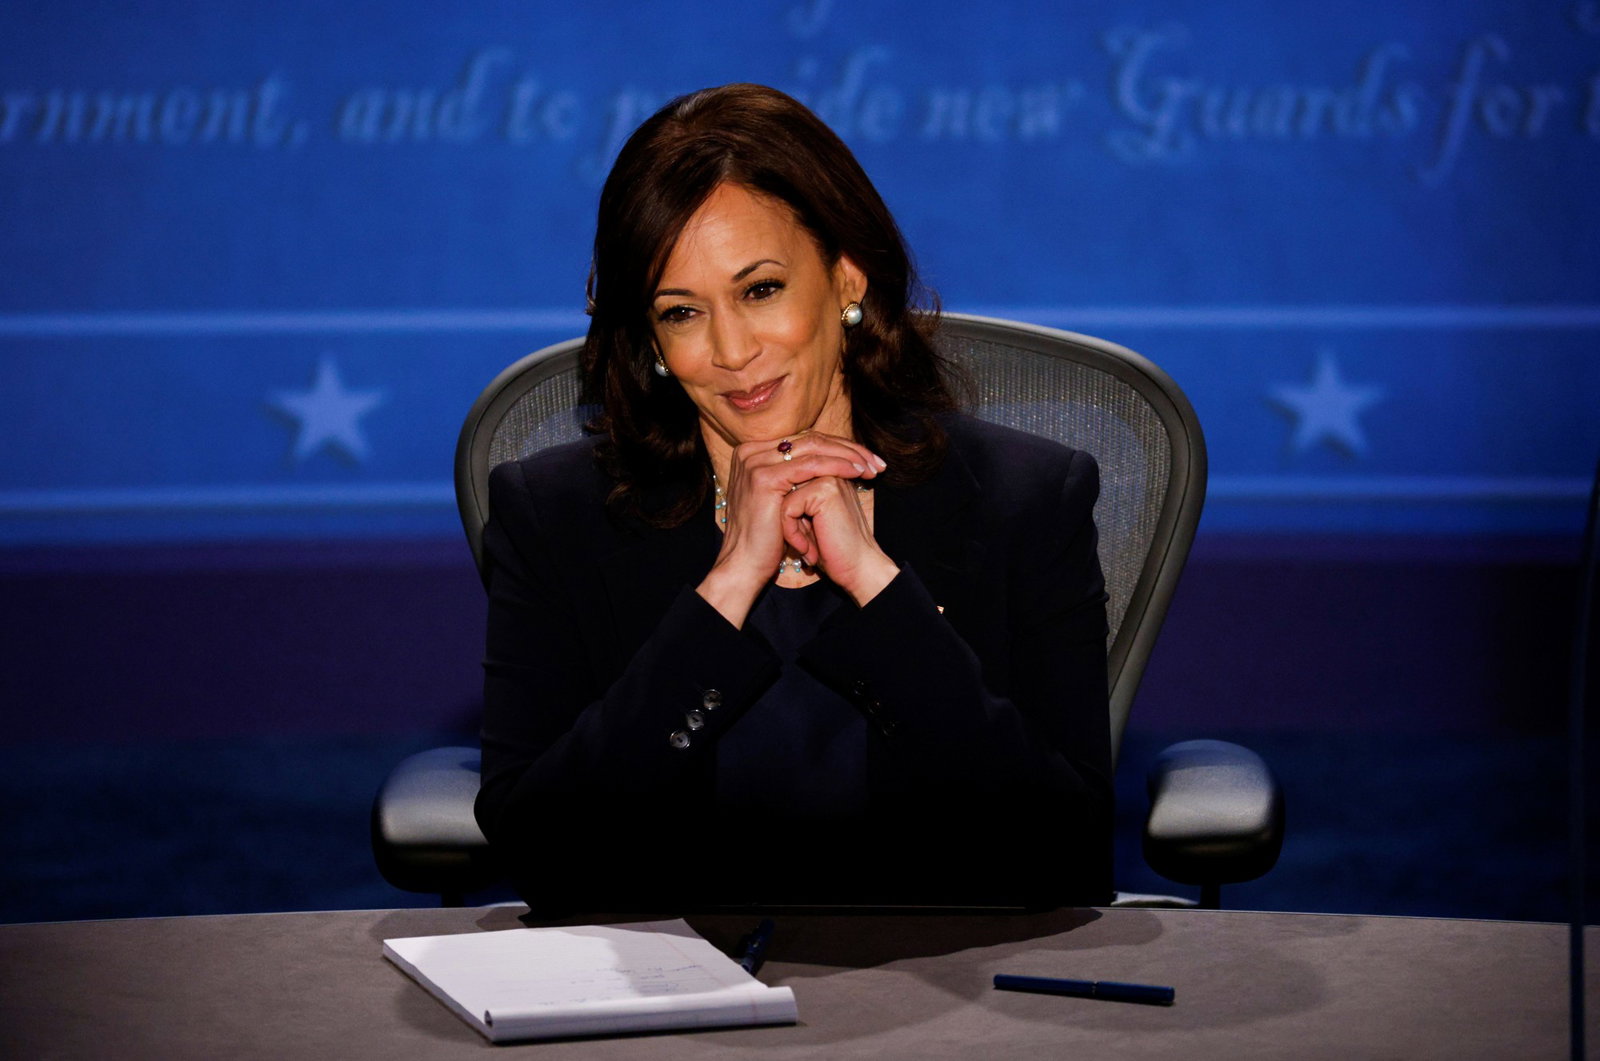 Harris smiles during a debate